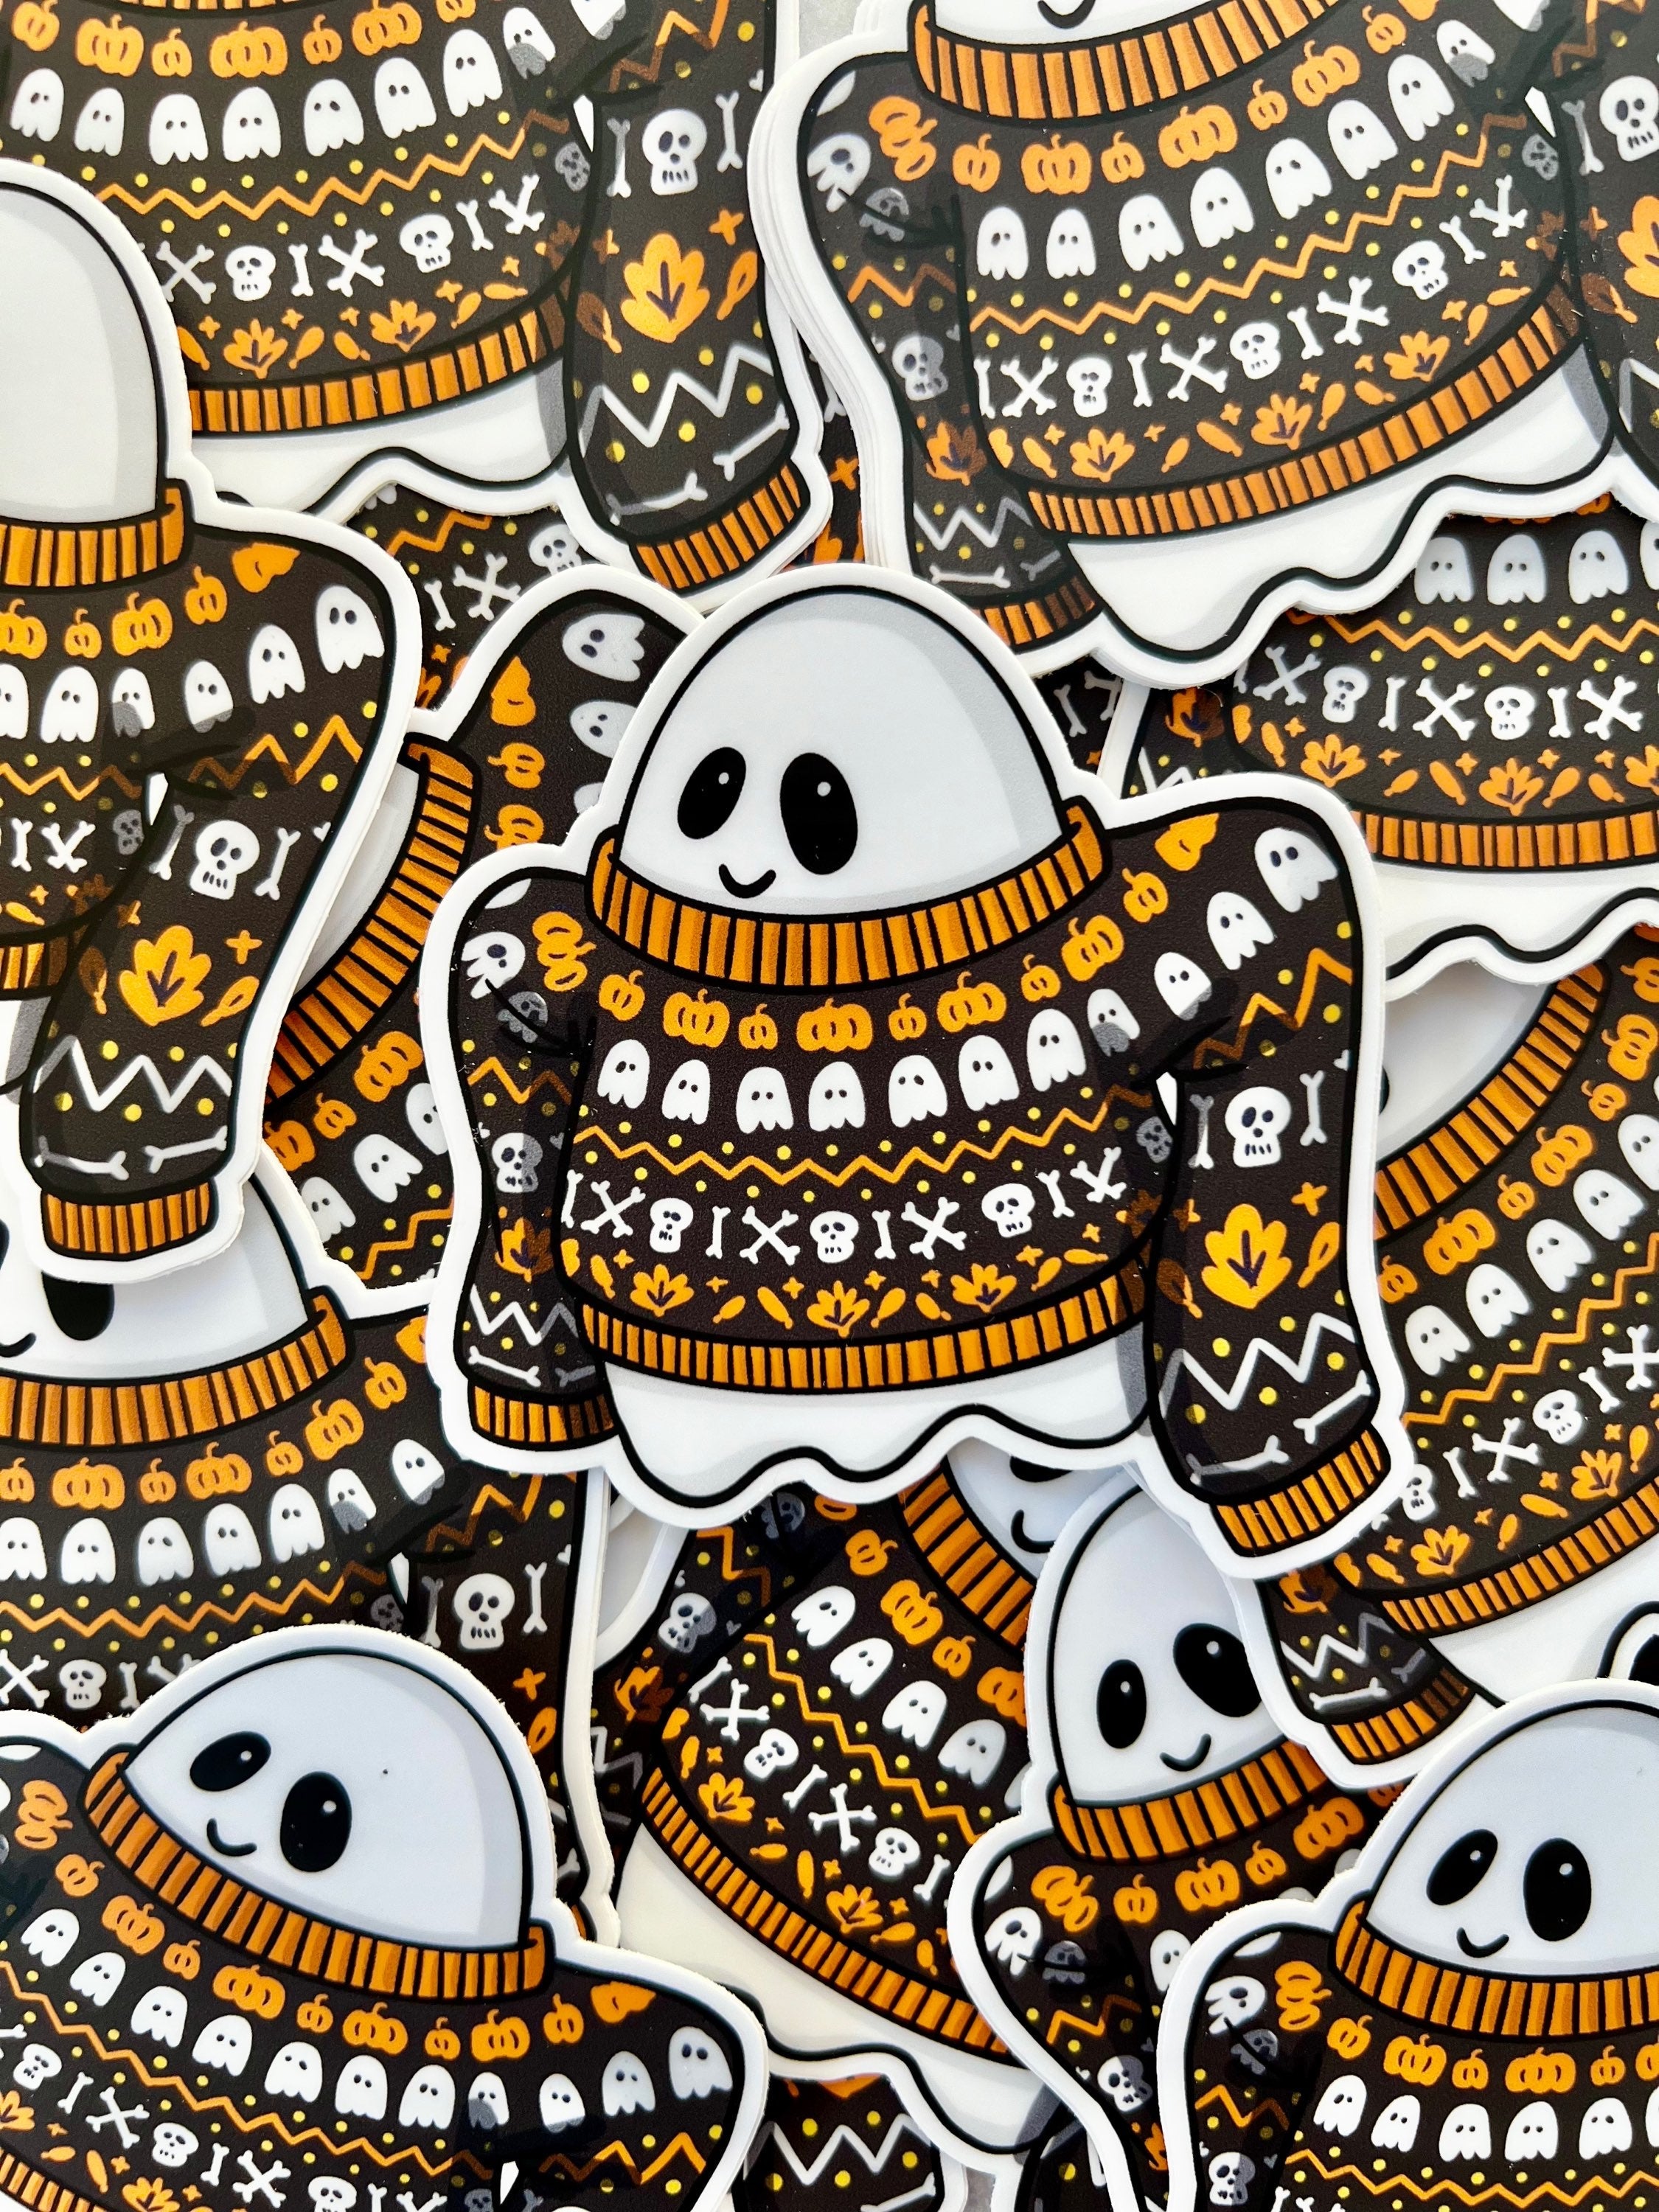 Sticker - Sweater Ghostie - 3x3in